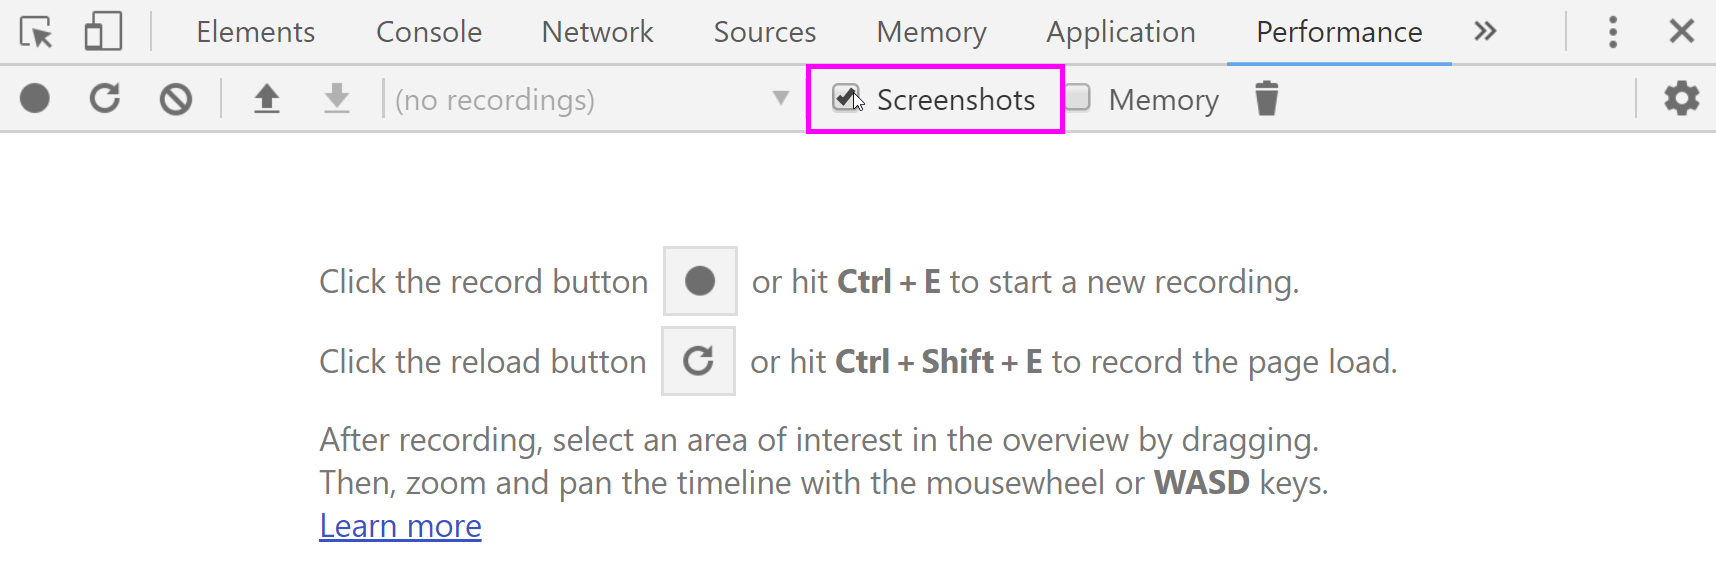 Select the screenshot option